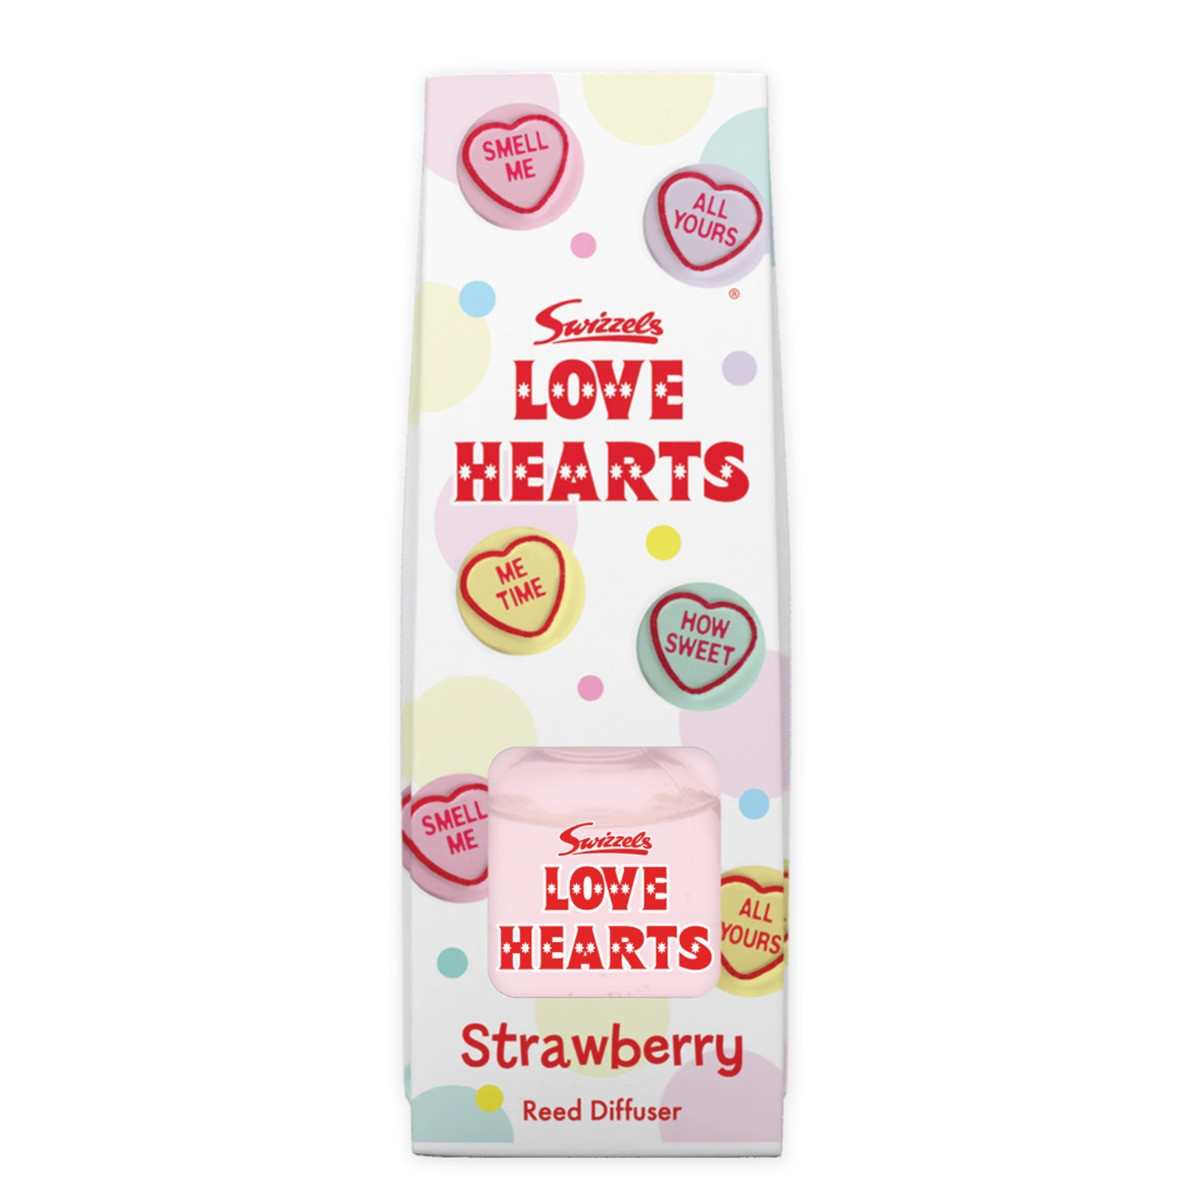 Swizzels 50ml Reed Diffuser - Love Hearts>